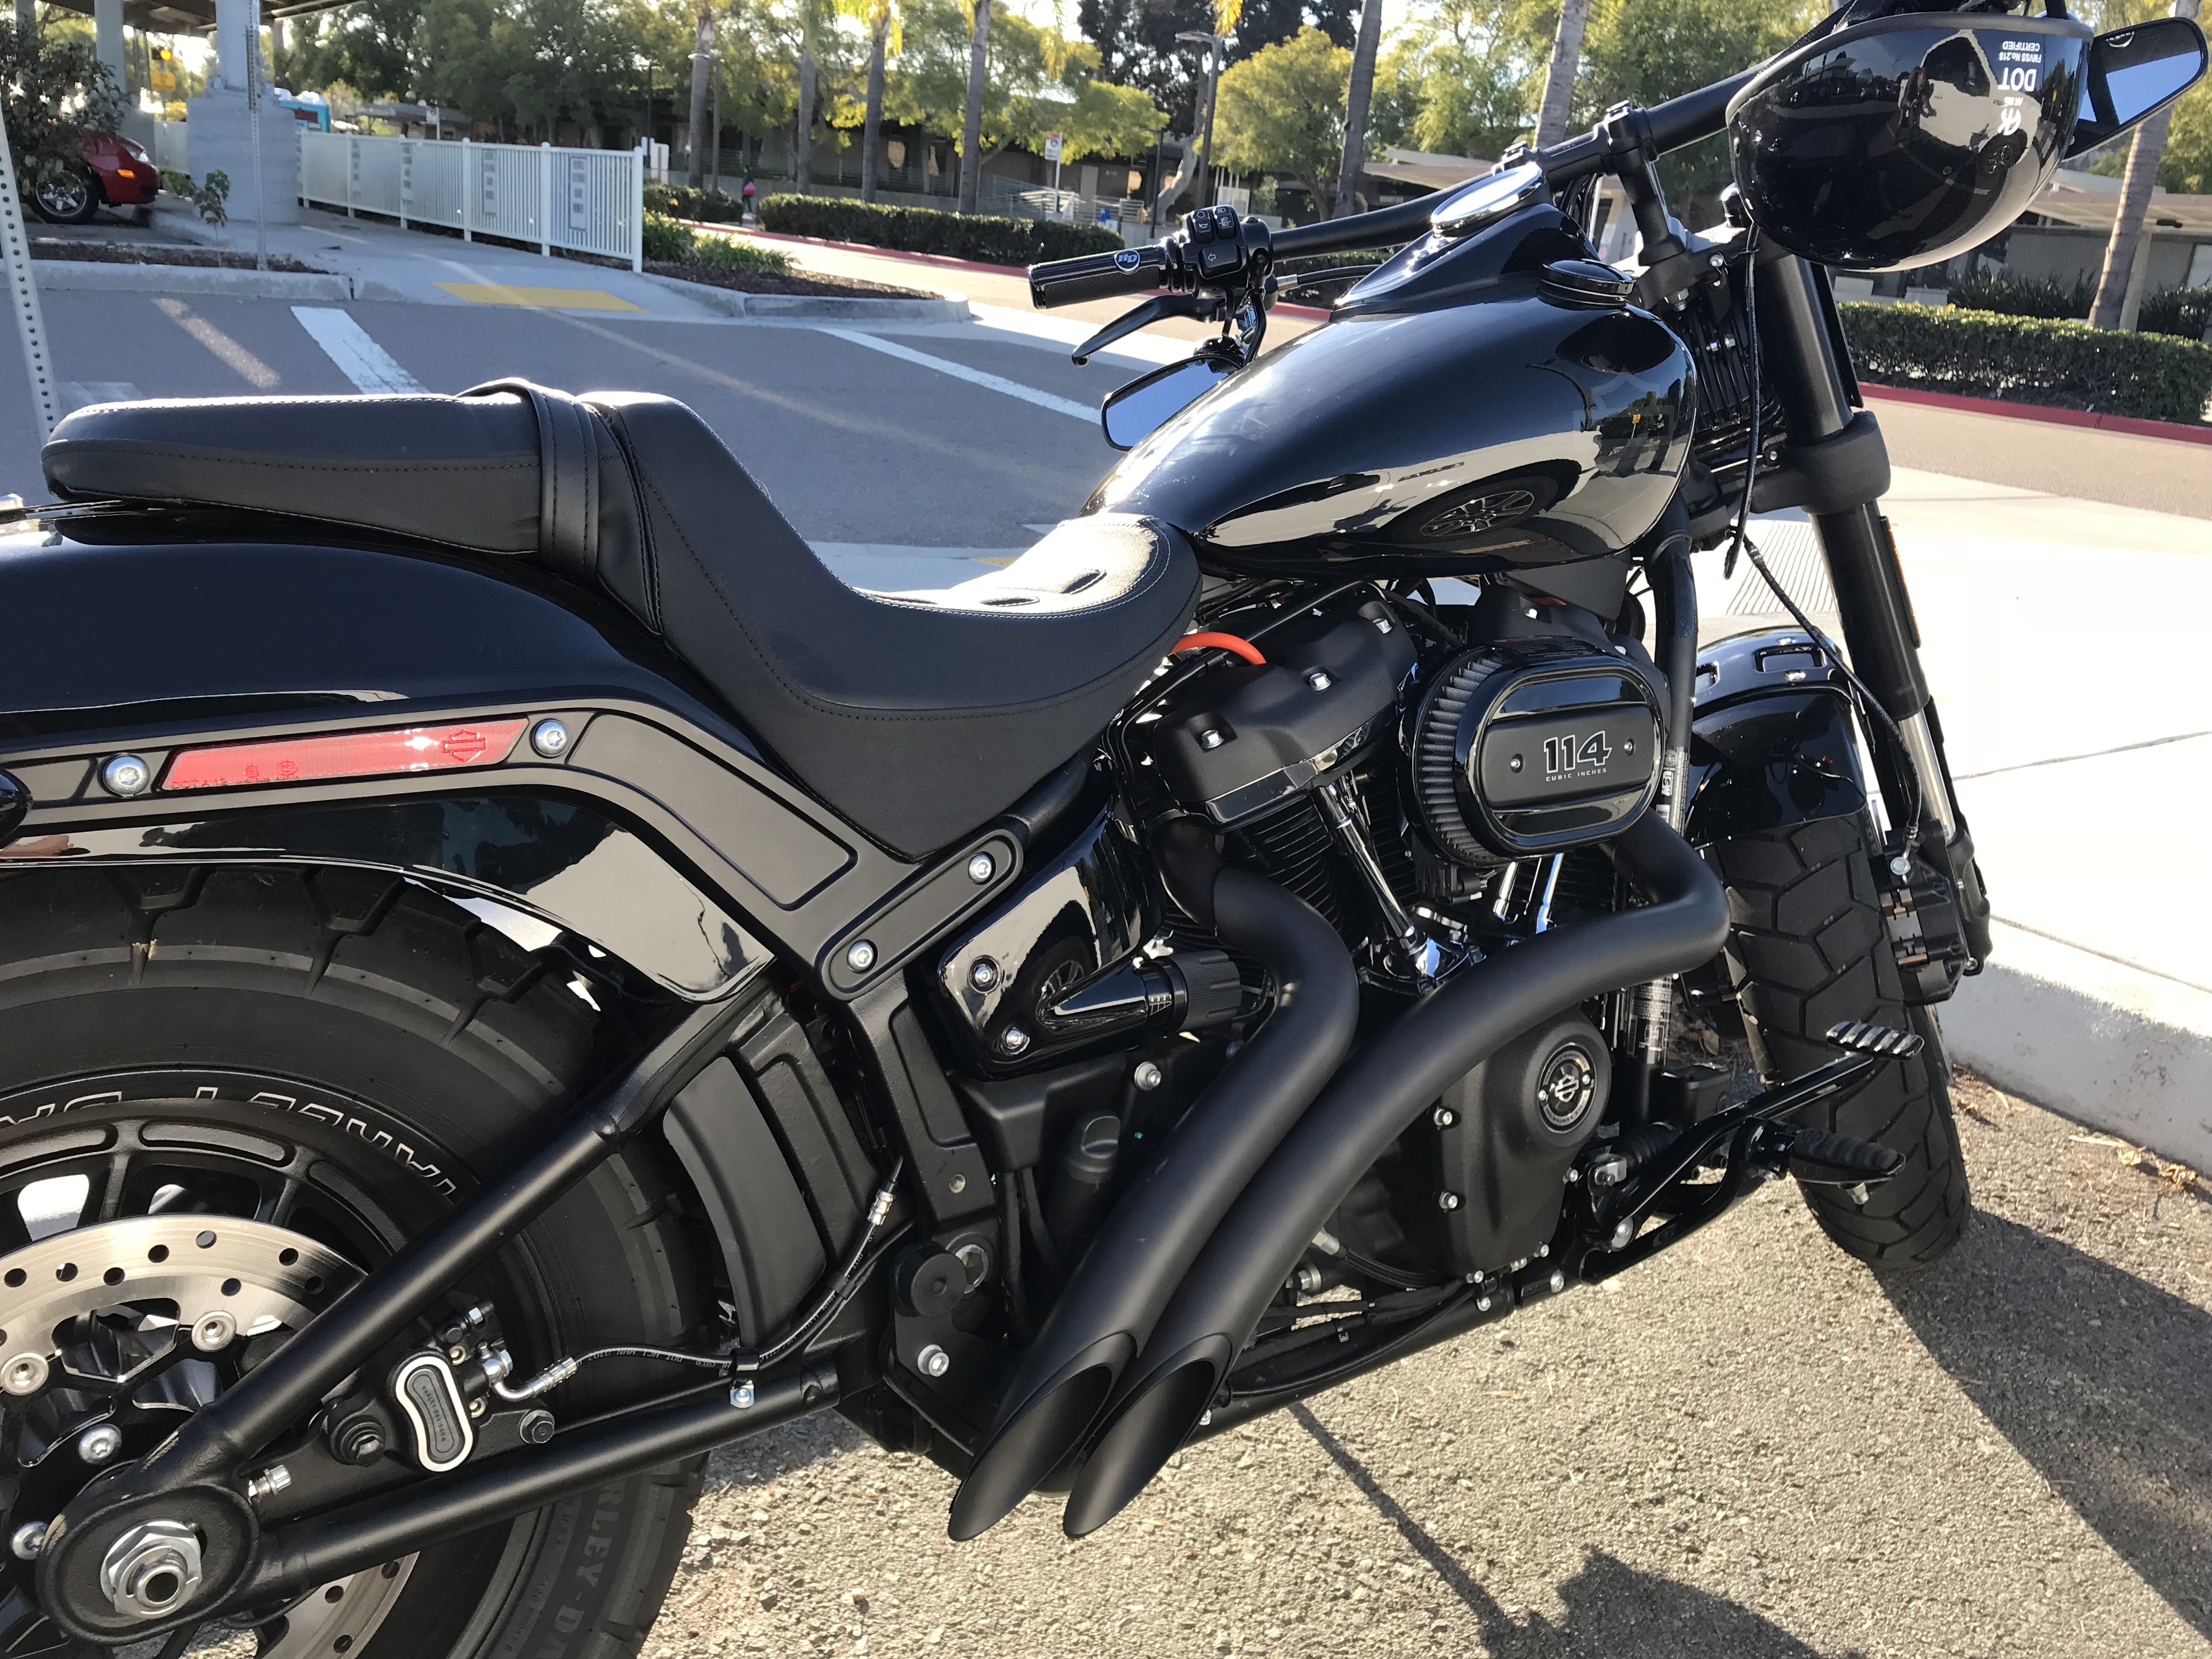 2018 fat bob exhaust!!! - Harley Davidson Forums